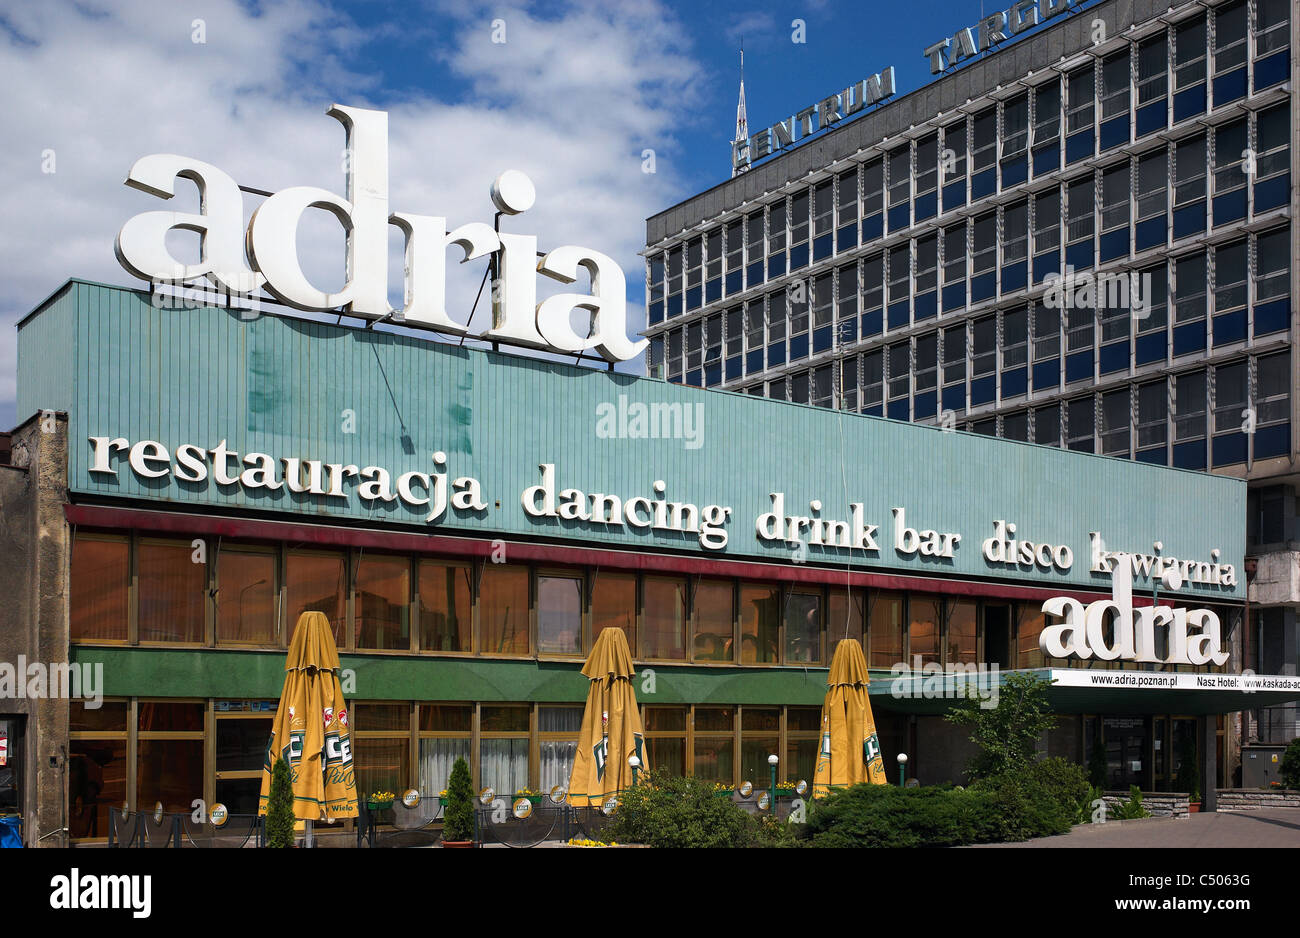 magi Udvalg leder The Adria restaurant and dance establishment in Poznan, Poland Stock Photo  - Alamy